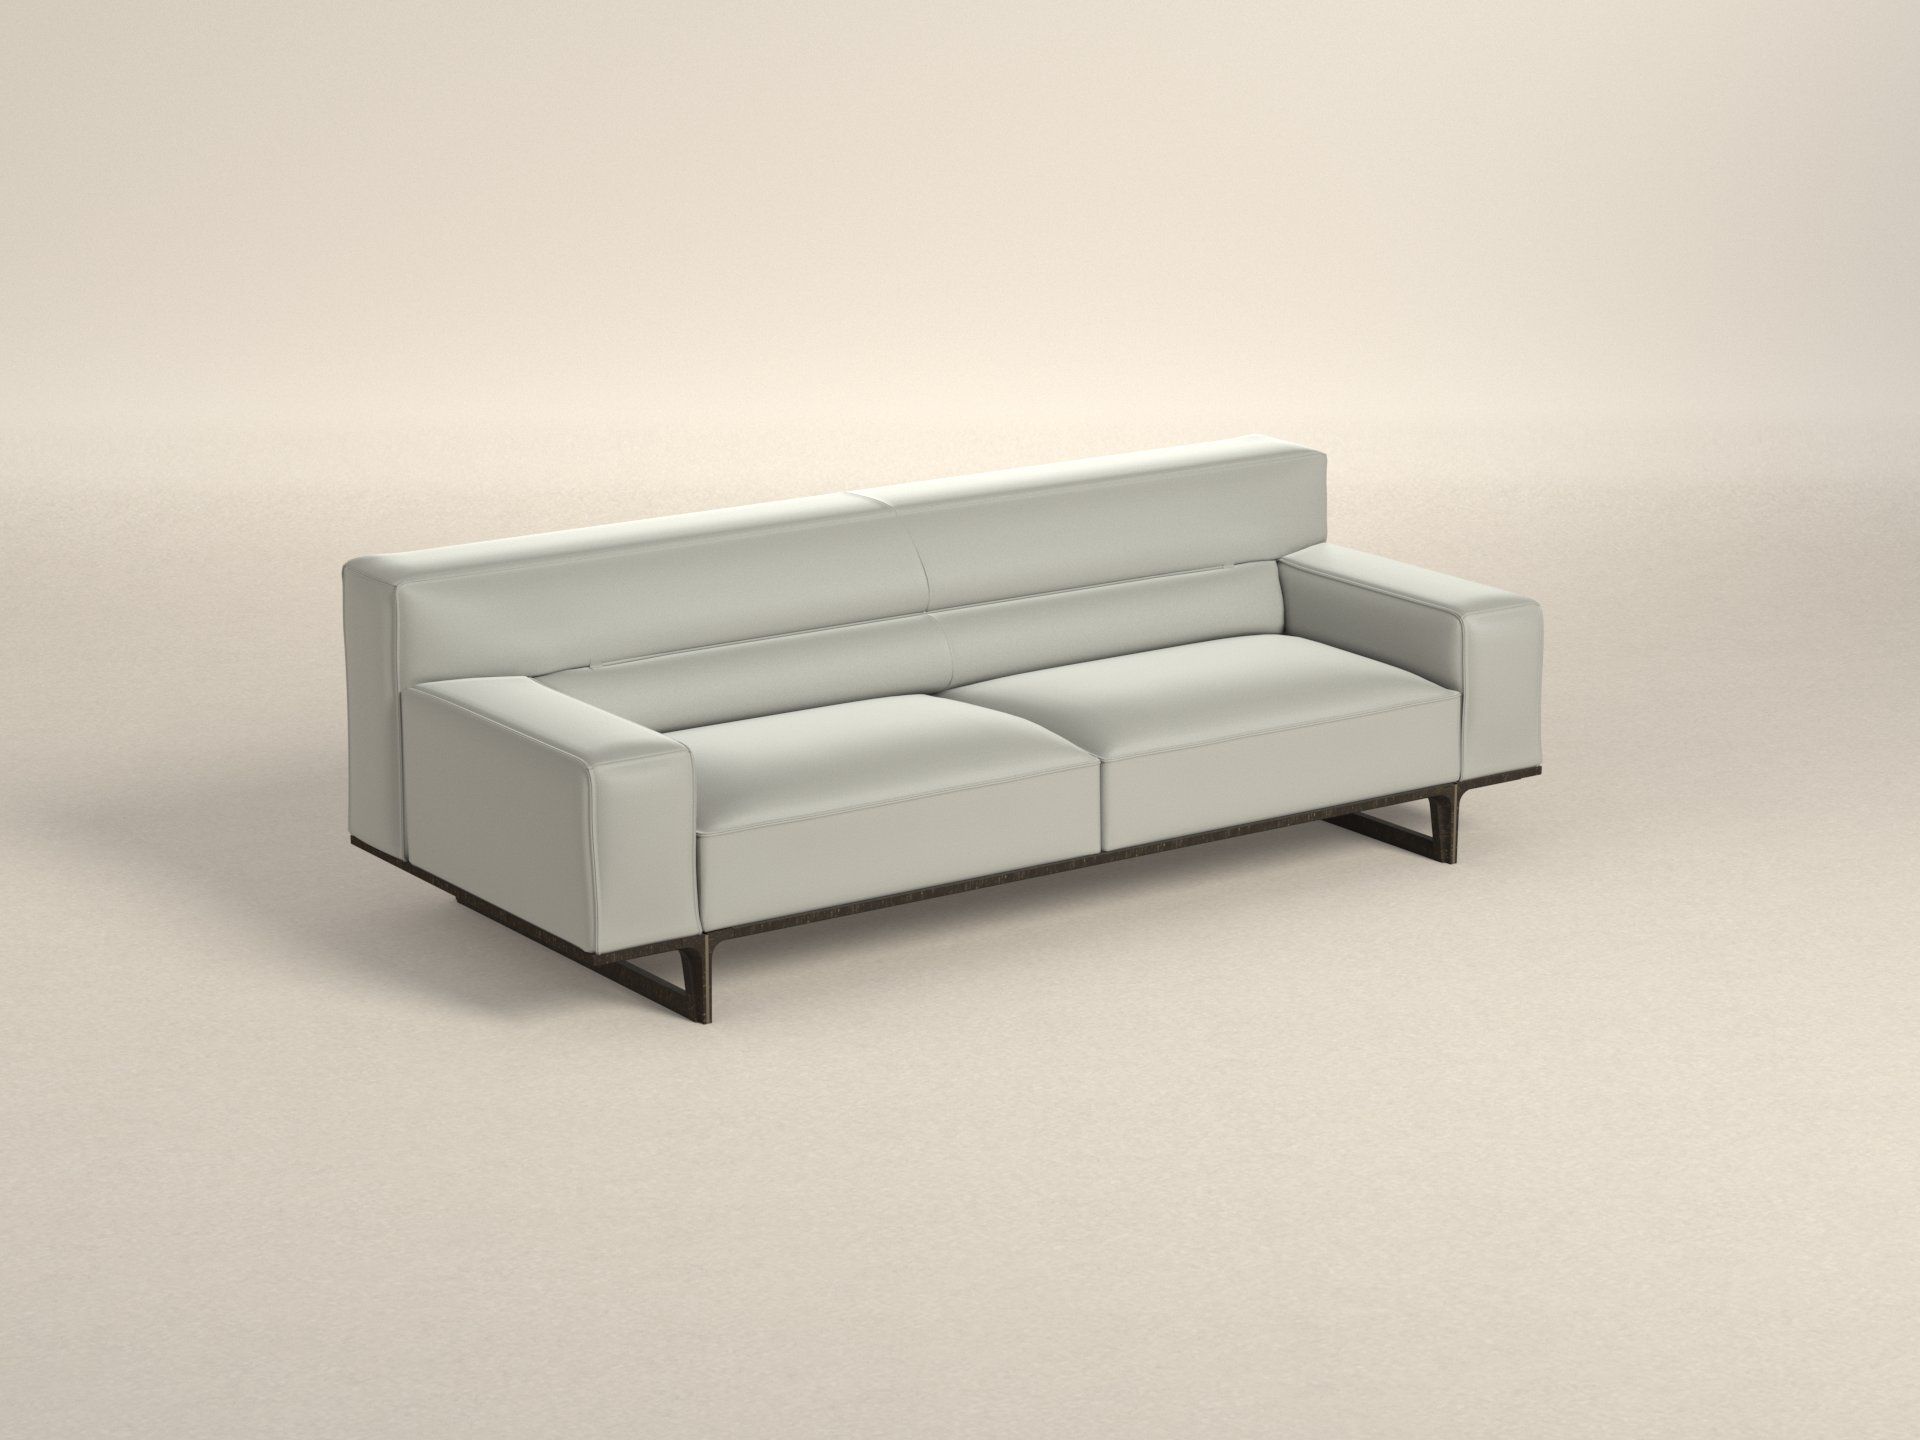 Preset default image - Kendo Sofa - Leather